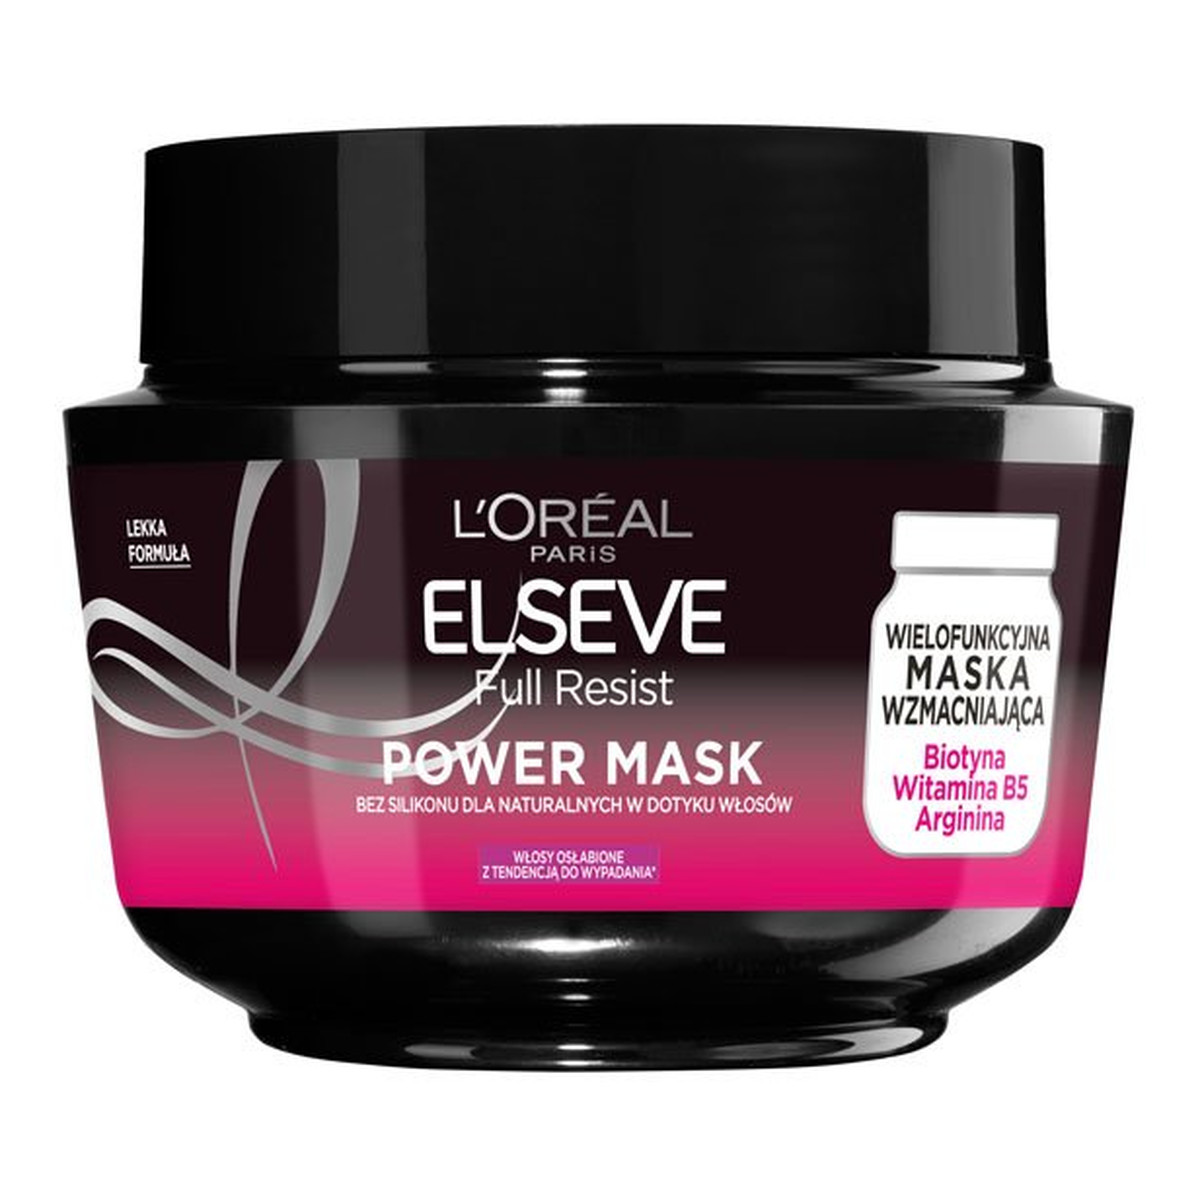 Elseve Full Resist Power Mask wielofunkcyjna maska wzmacniająca 300ml